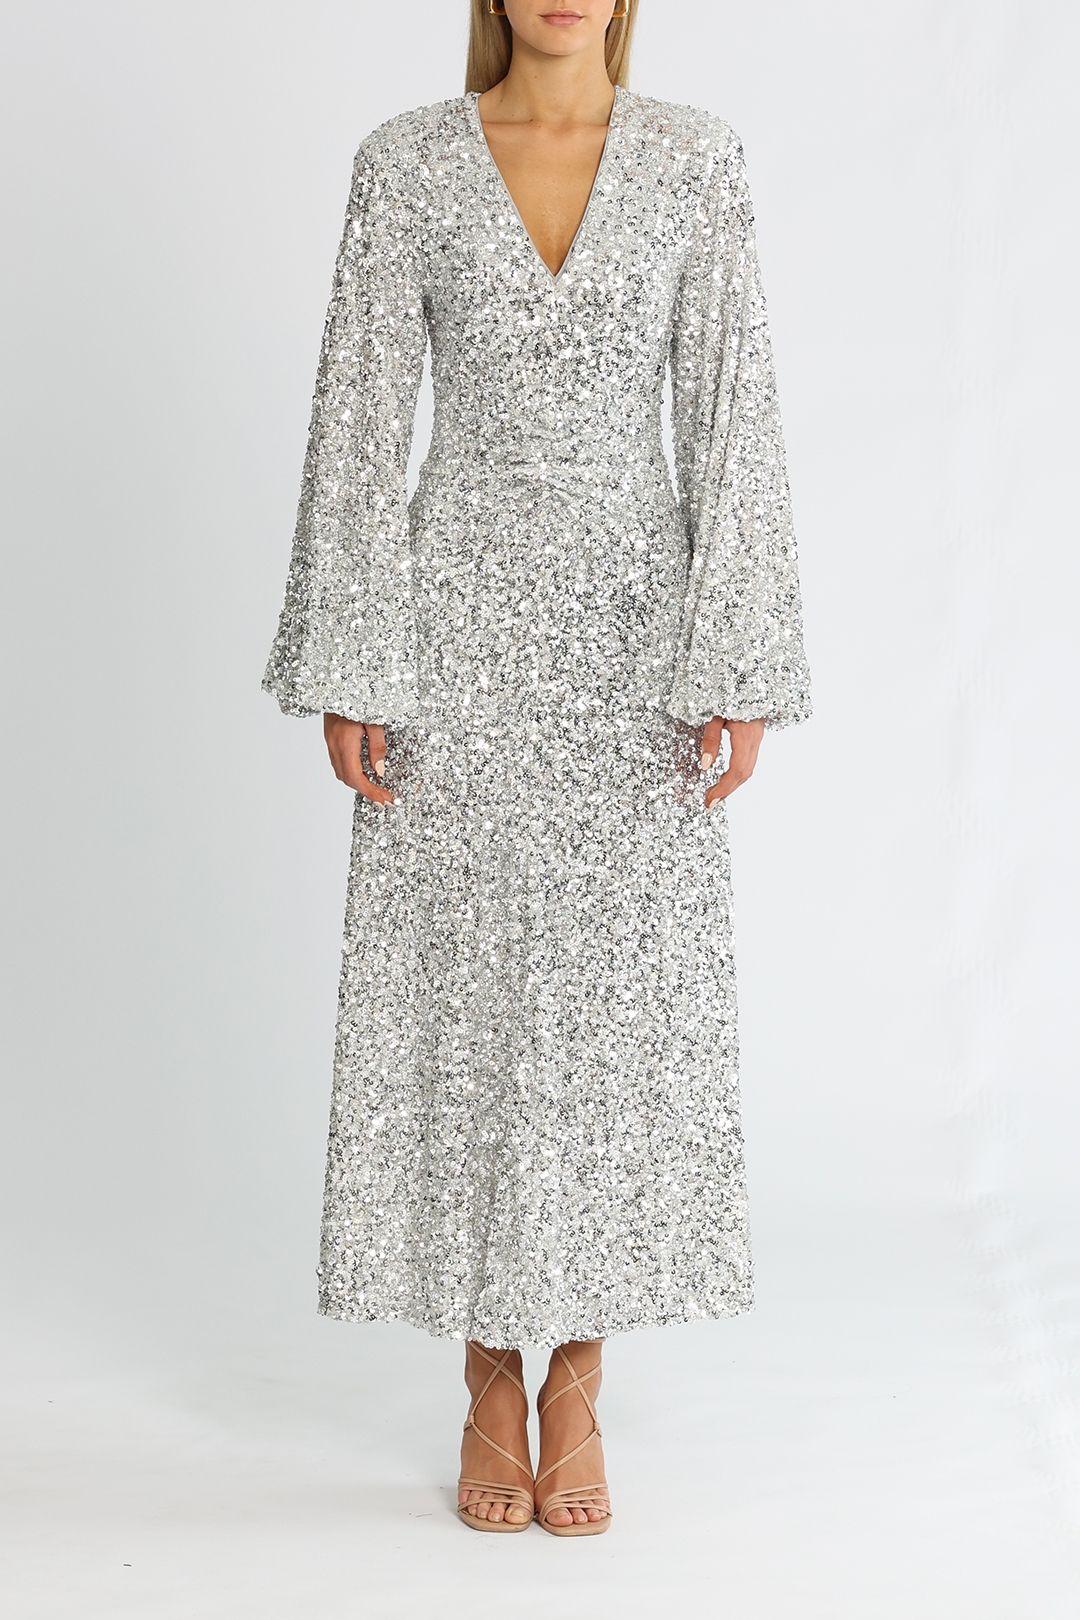 Rotate By Birger Christensen Sirin Silver Dress